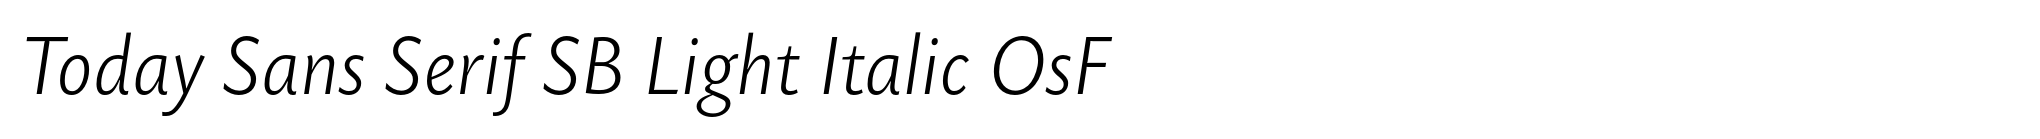 Today Sans Serif SB Light Italic OsF image